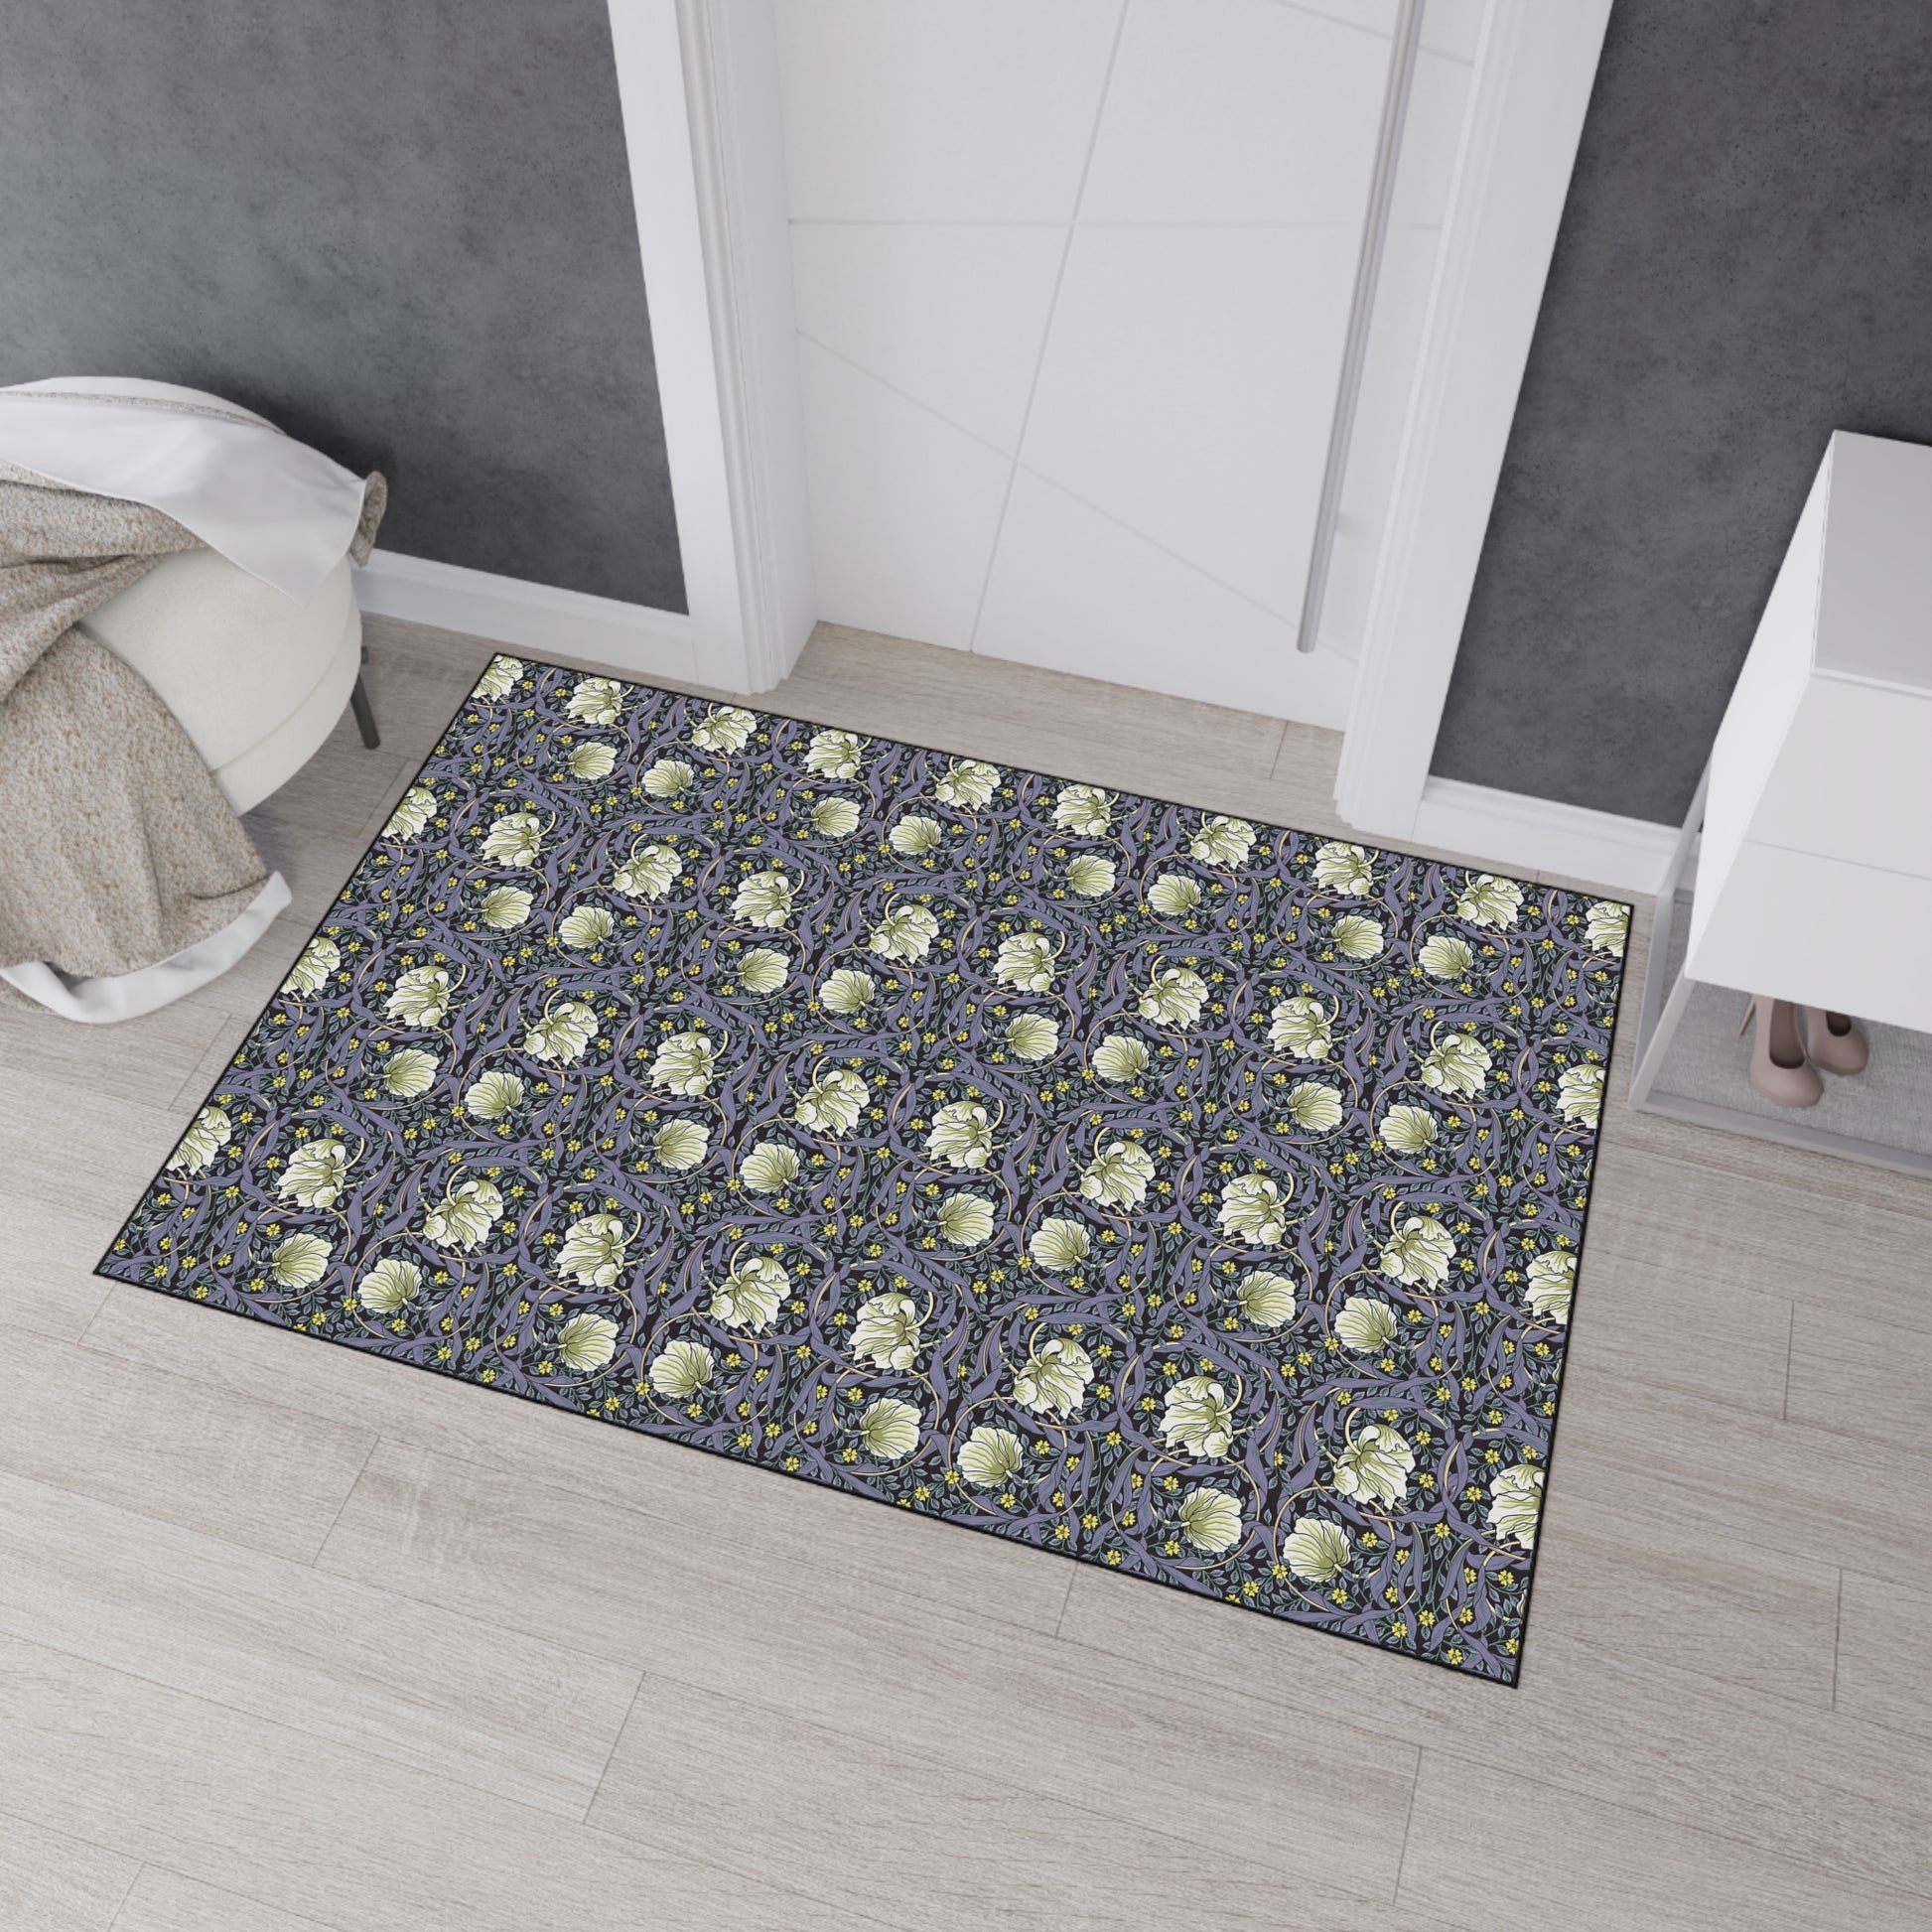 william-morris-co-heavy-duty-floor-mat-floor-mat-pimpernel-collection-lavender-9